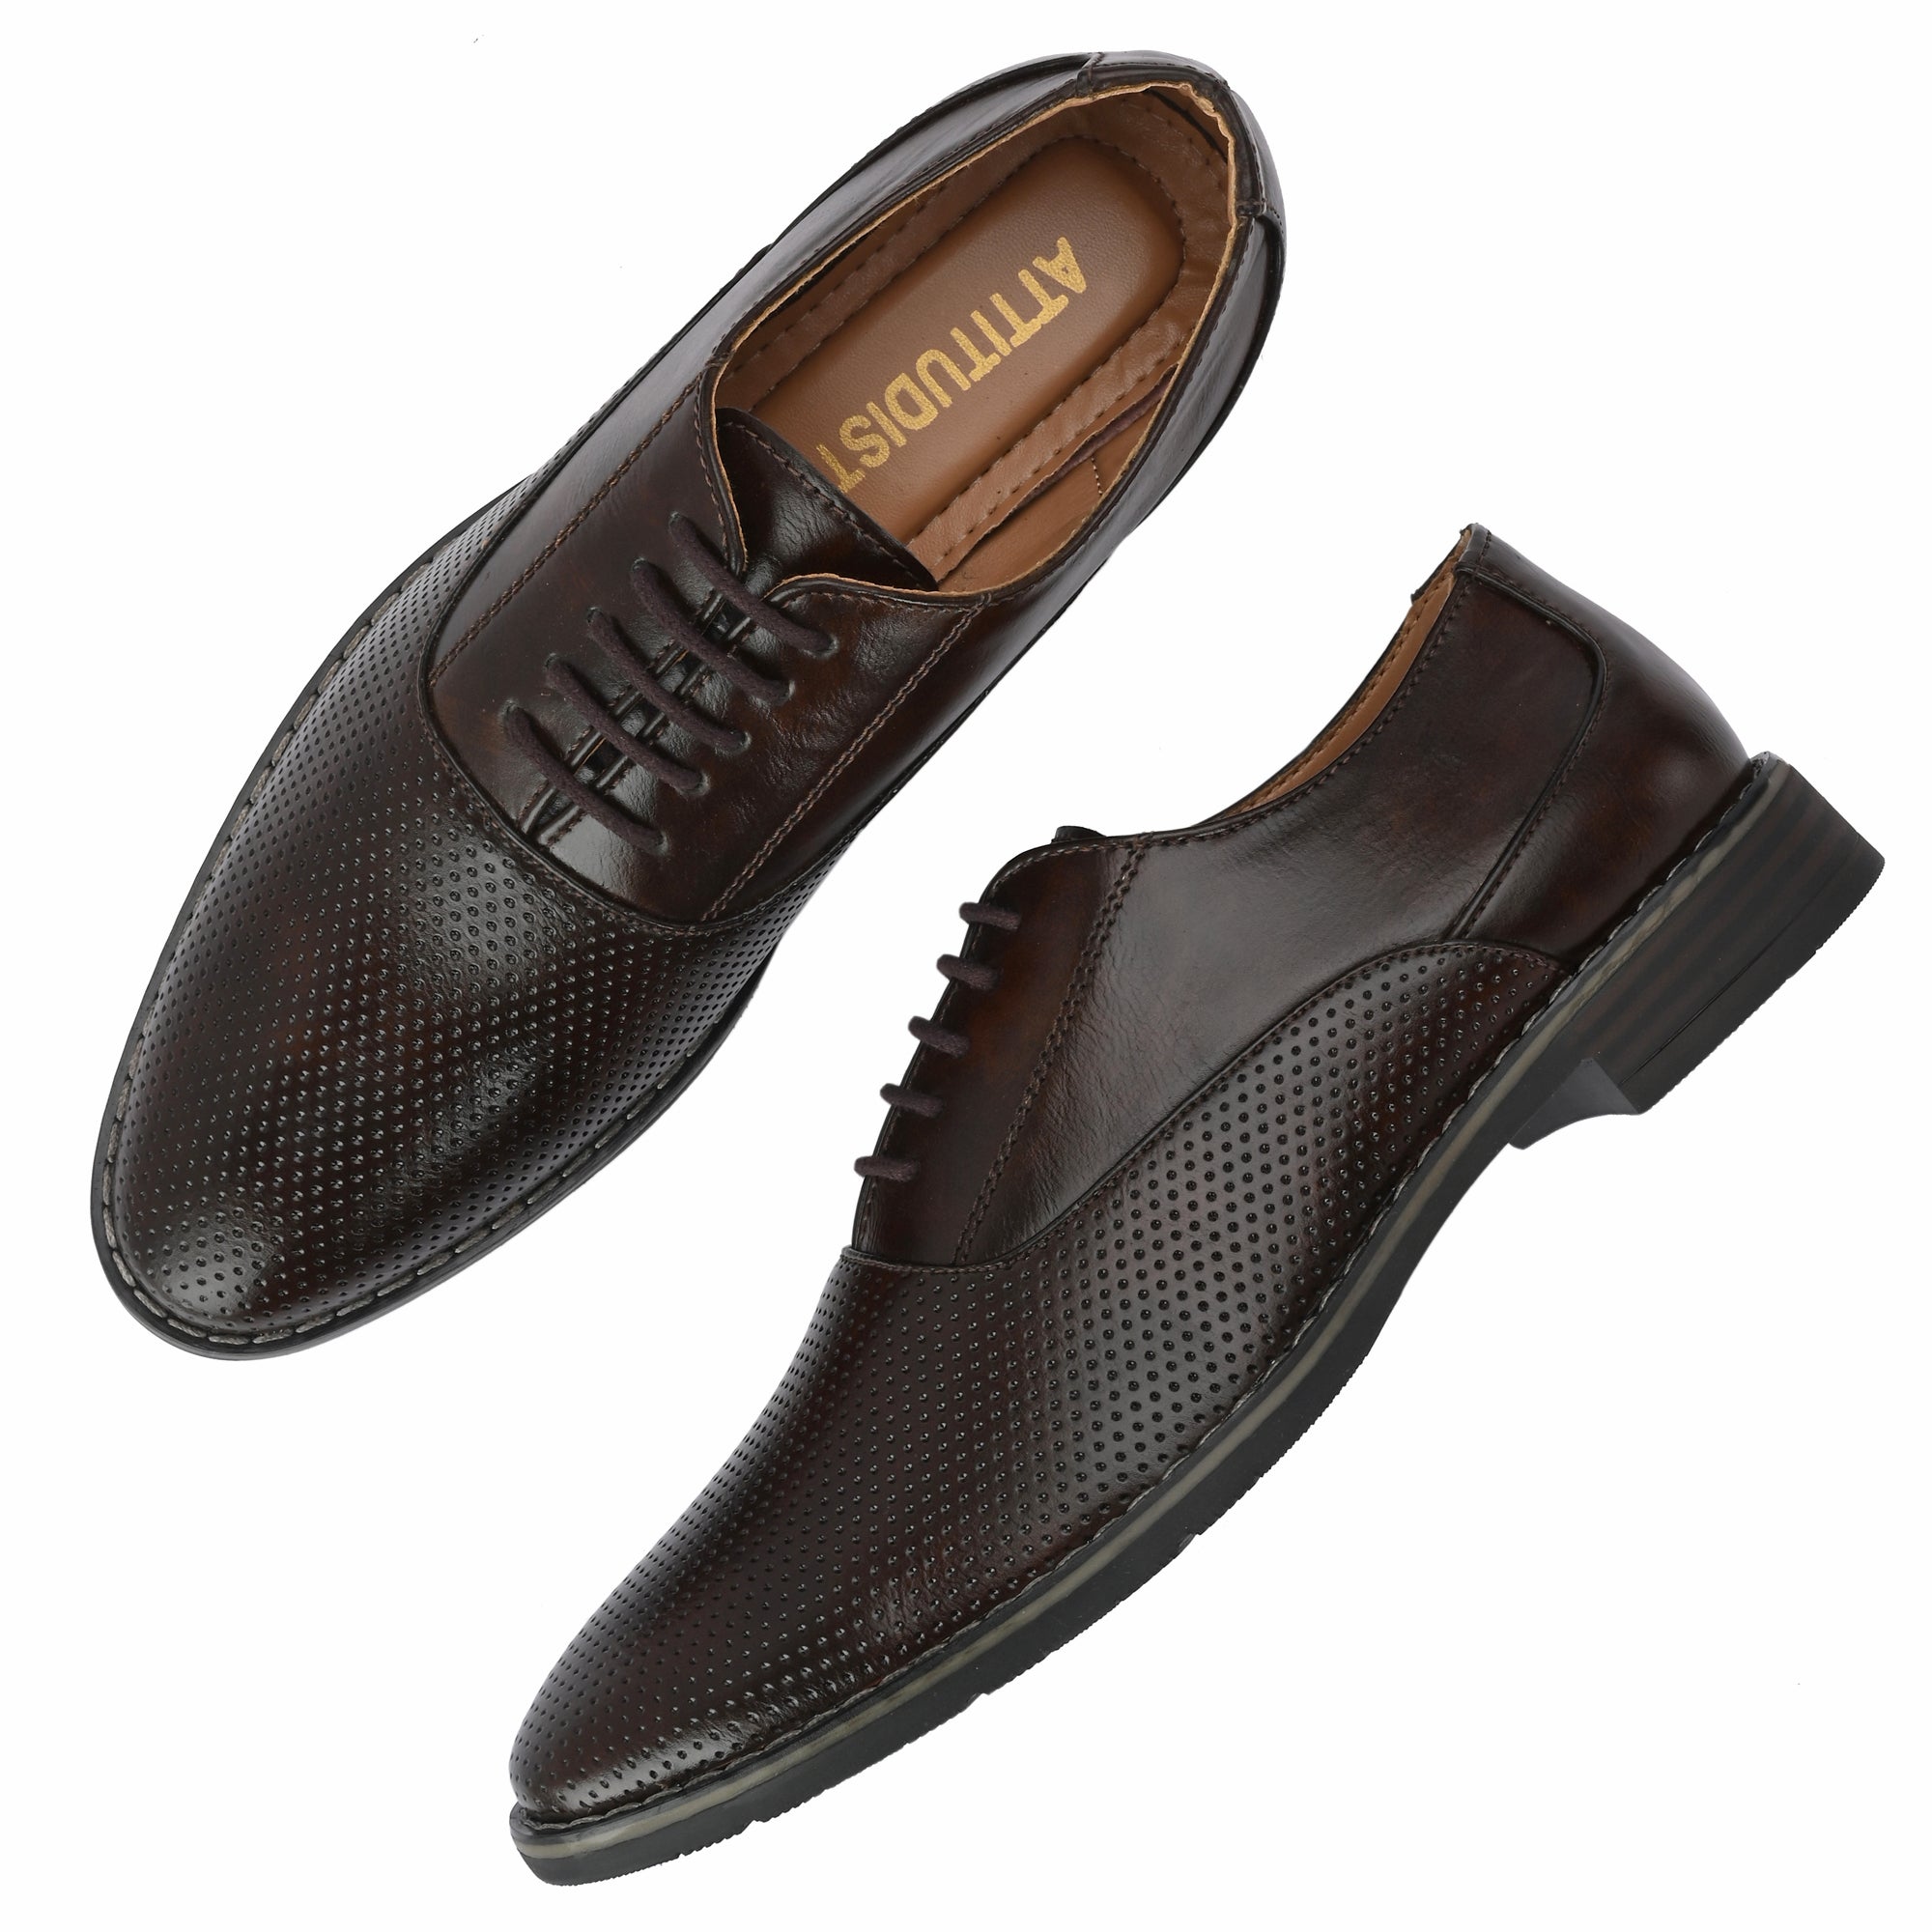 black-formal-lace-up-attitudist-shoes-for-men-with-design-sp10a